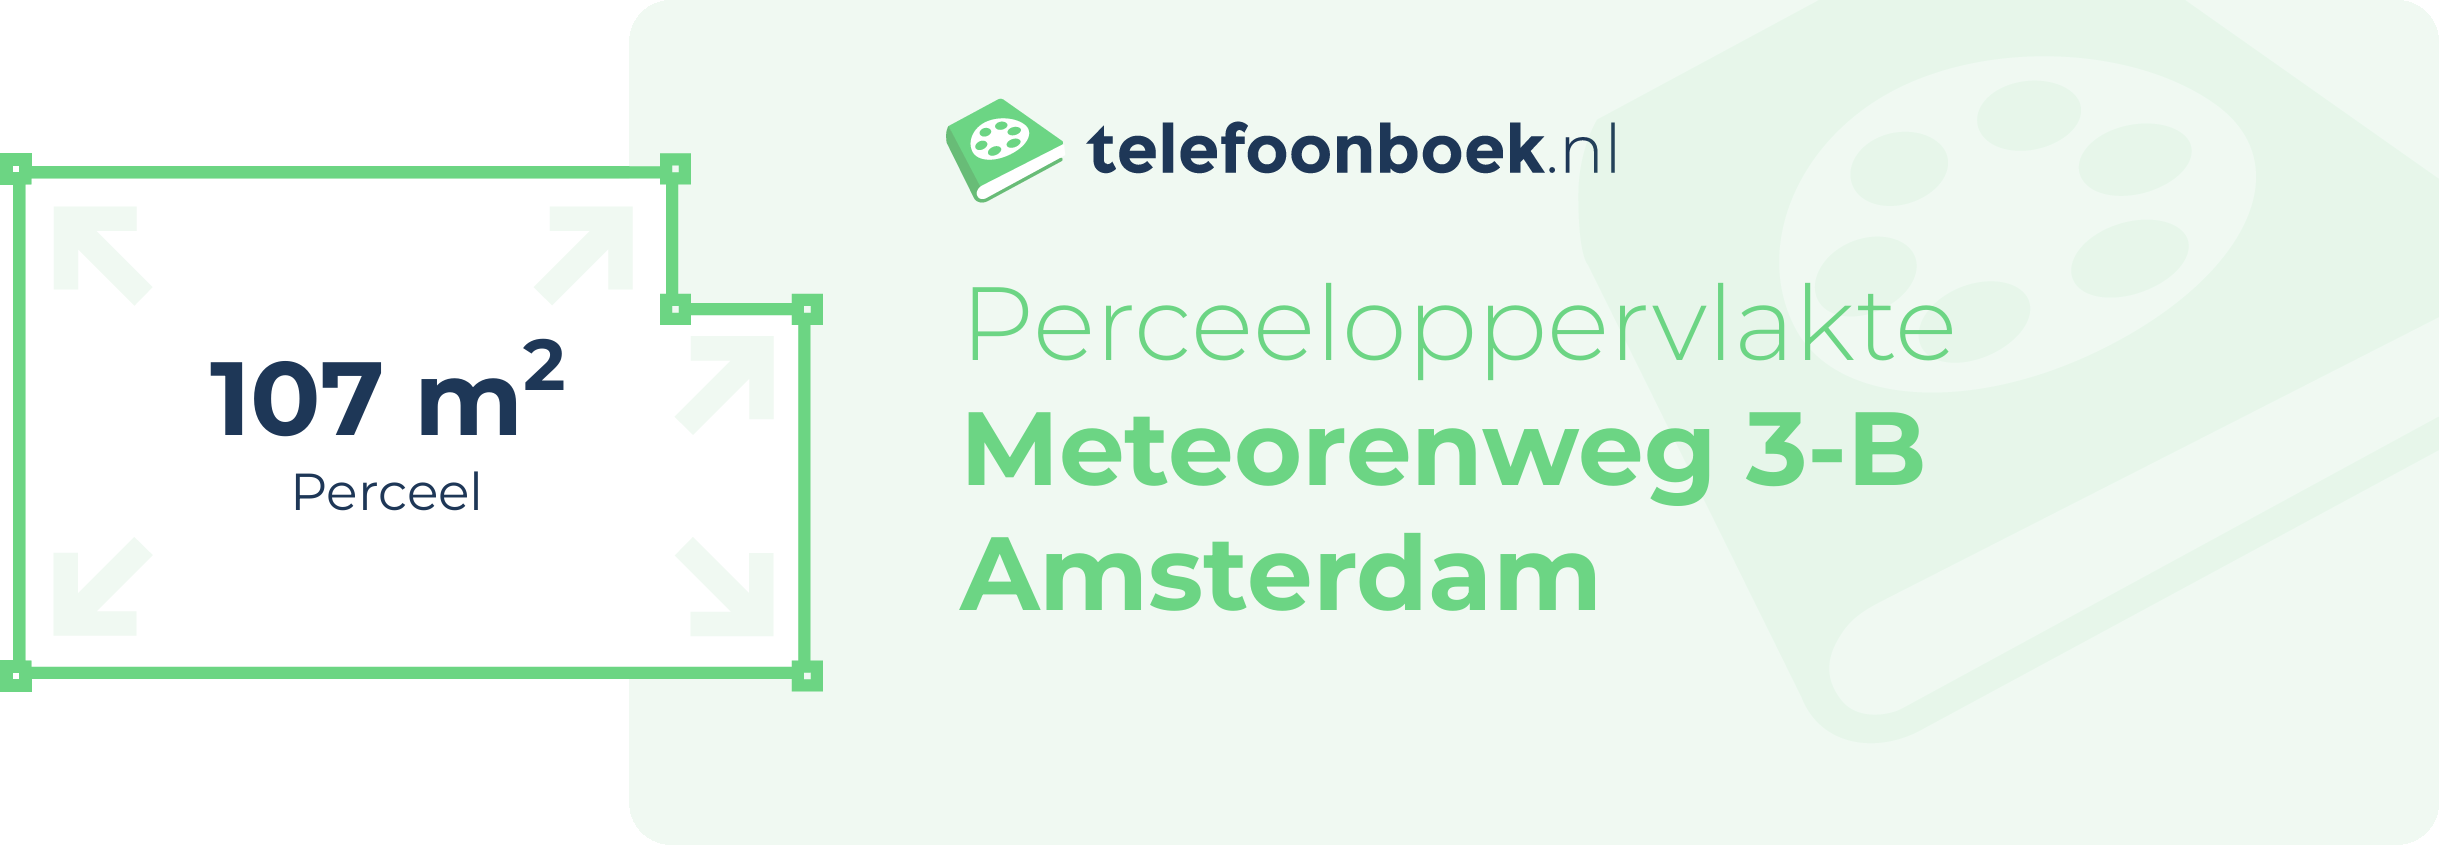 Perceeloppervlakte Meteorenweg 3-B Amsterdam